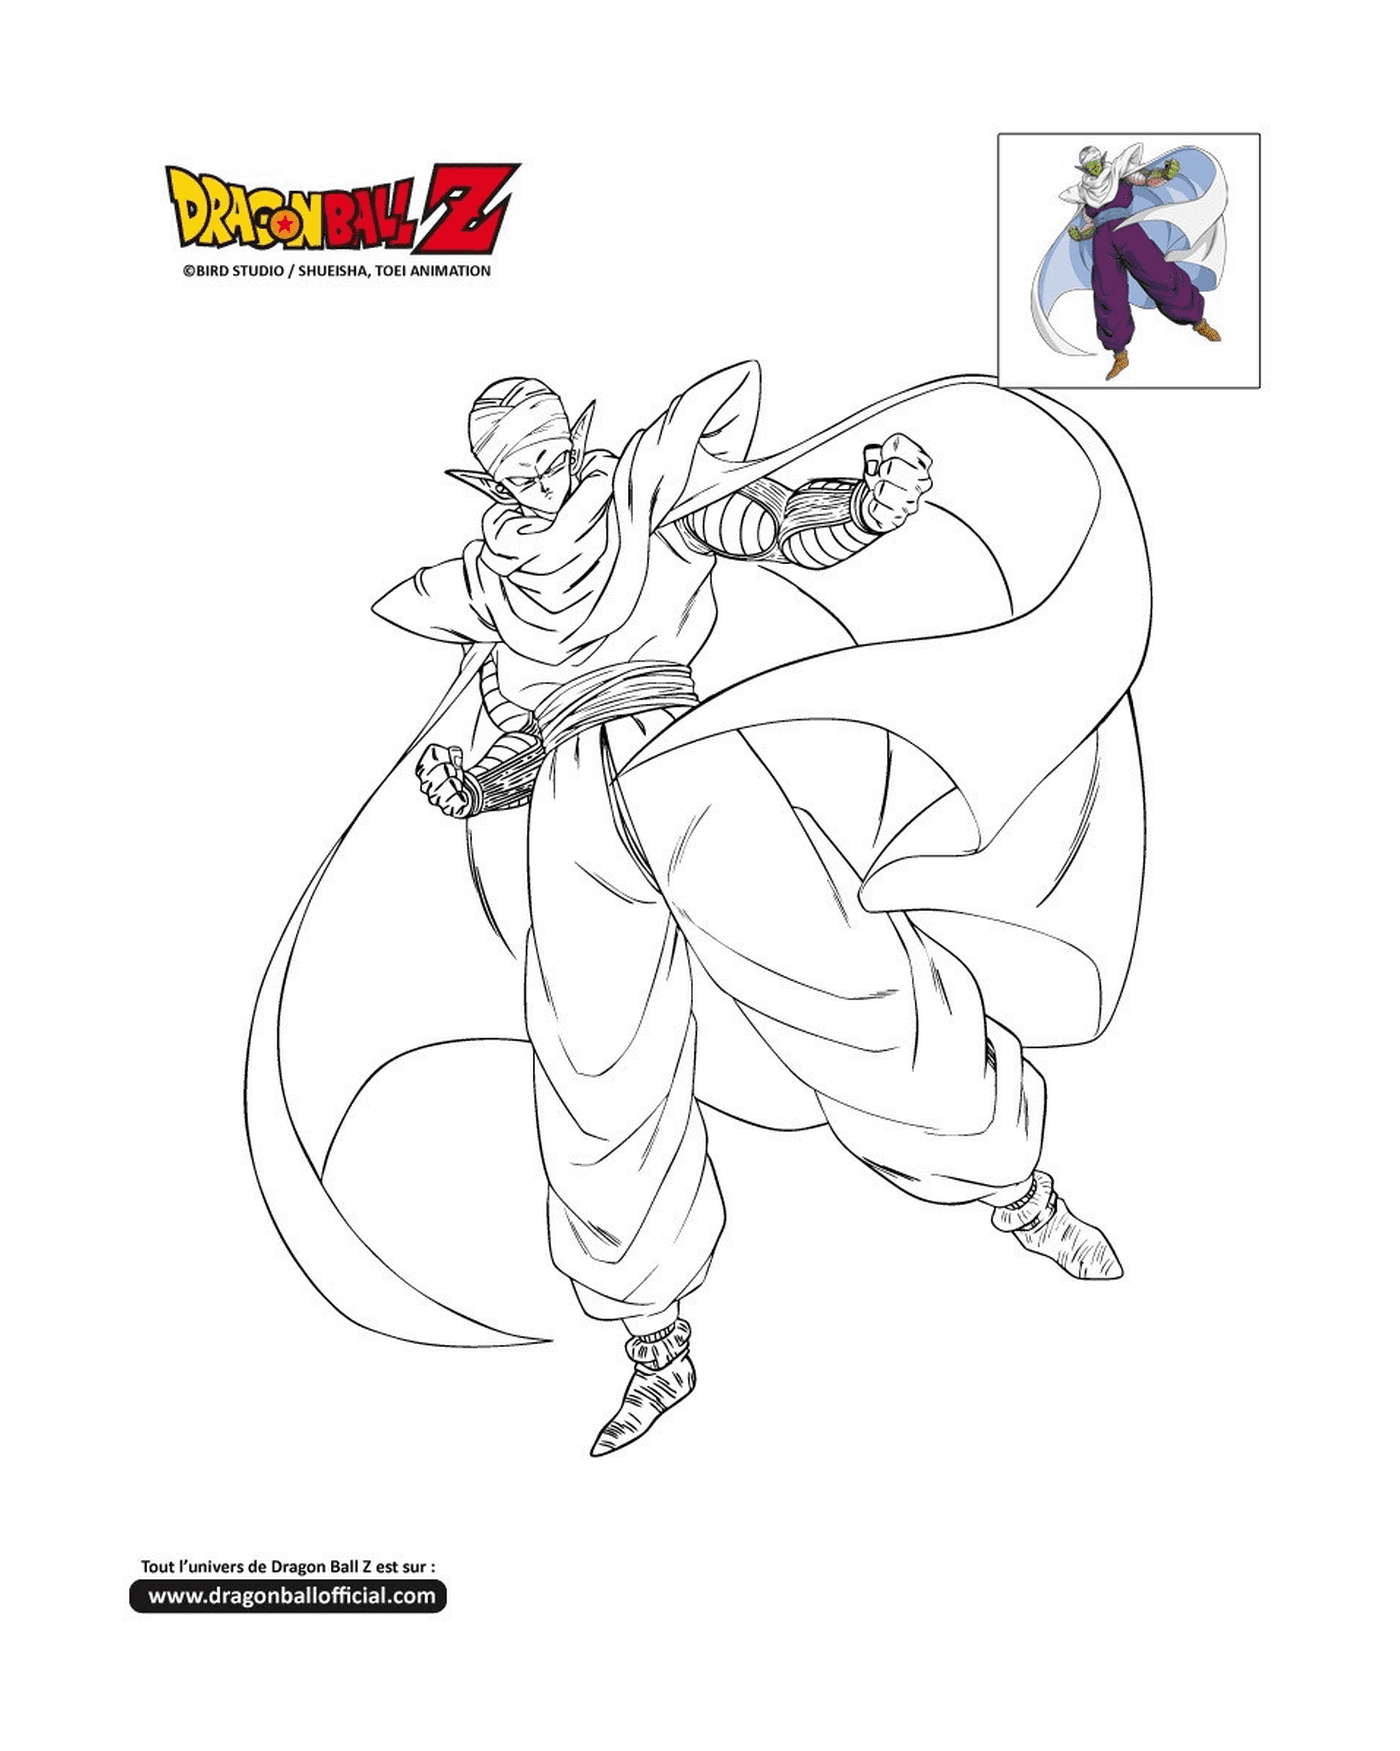  Piccolo fliegt in der Luft in Dragon Ball Z 